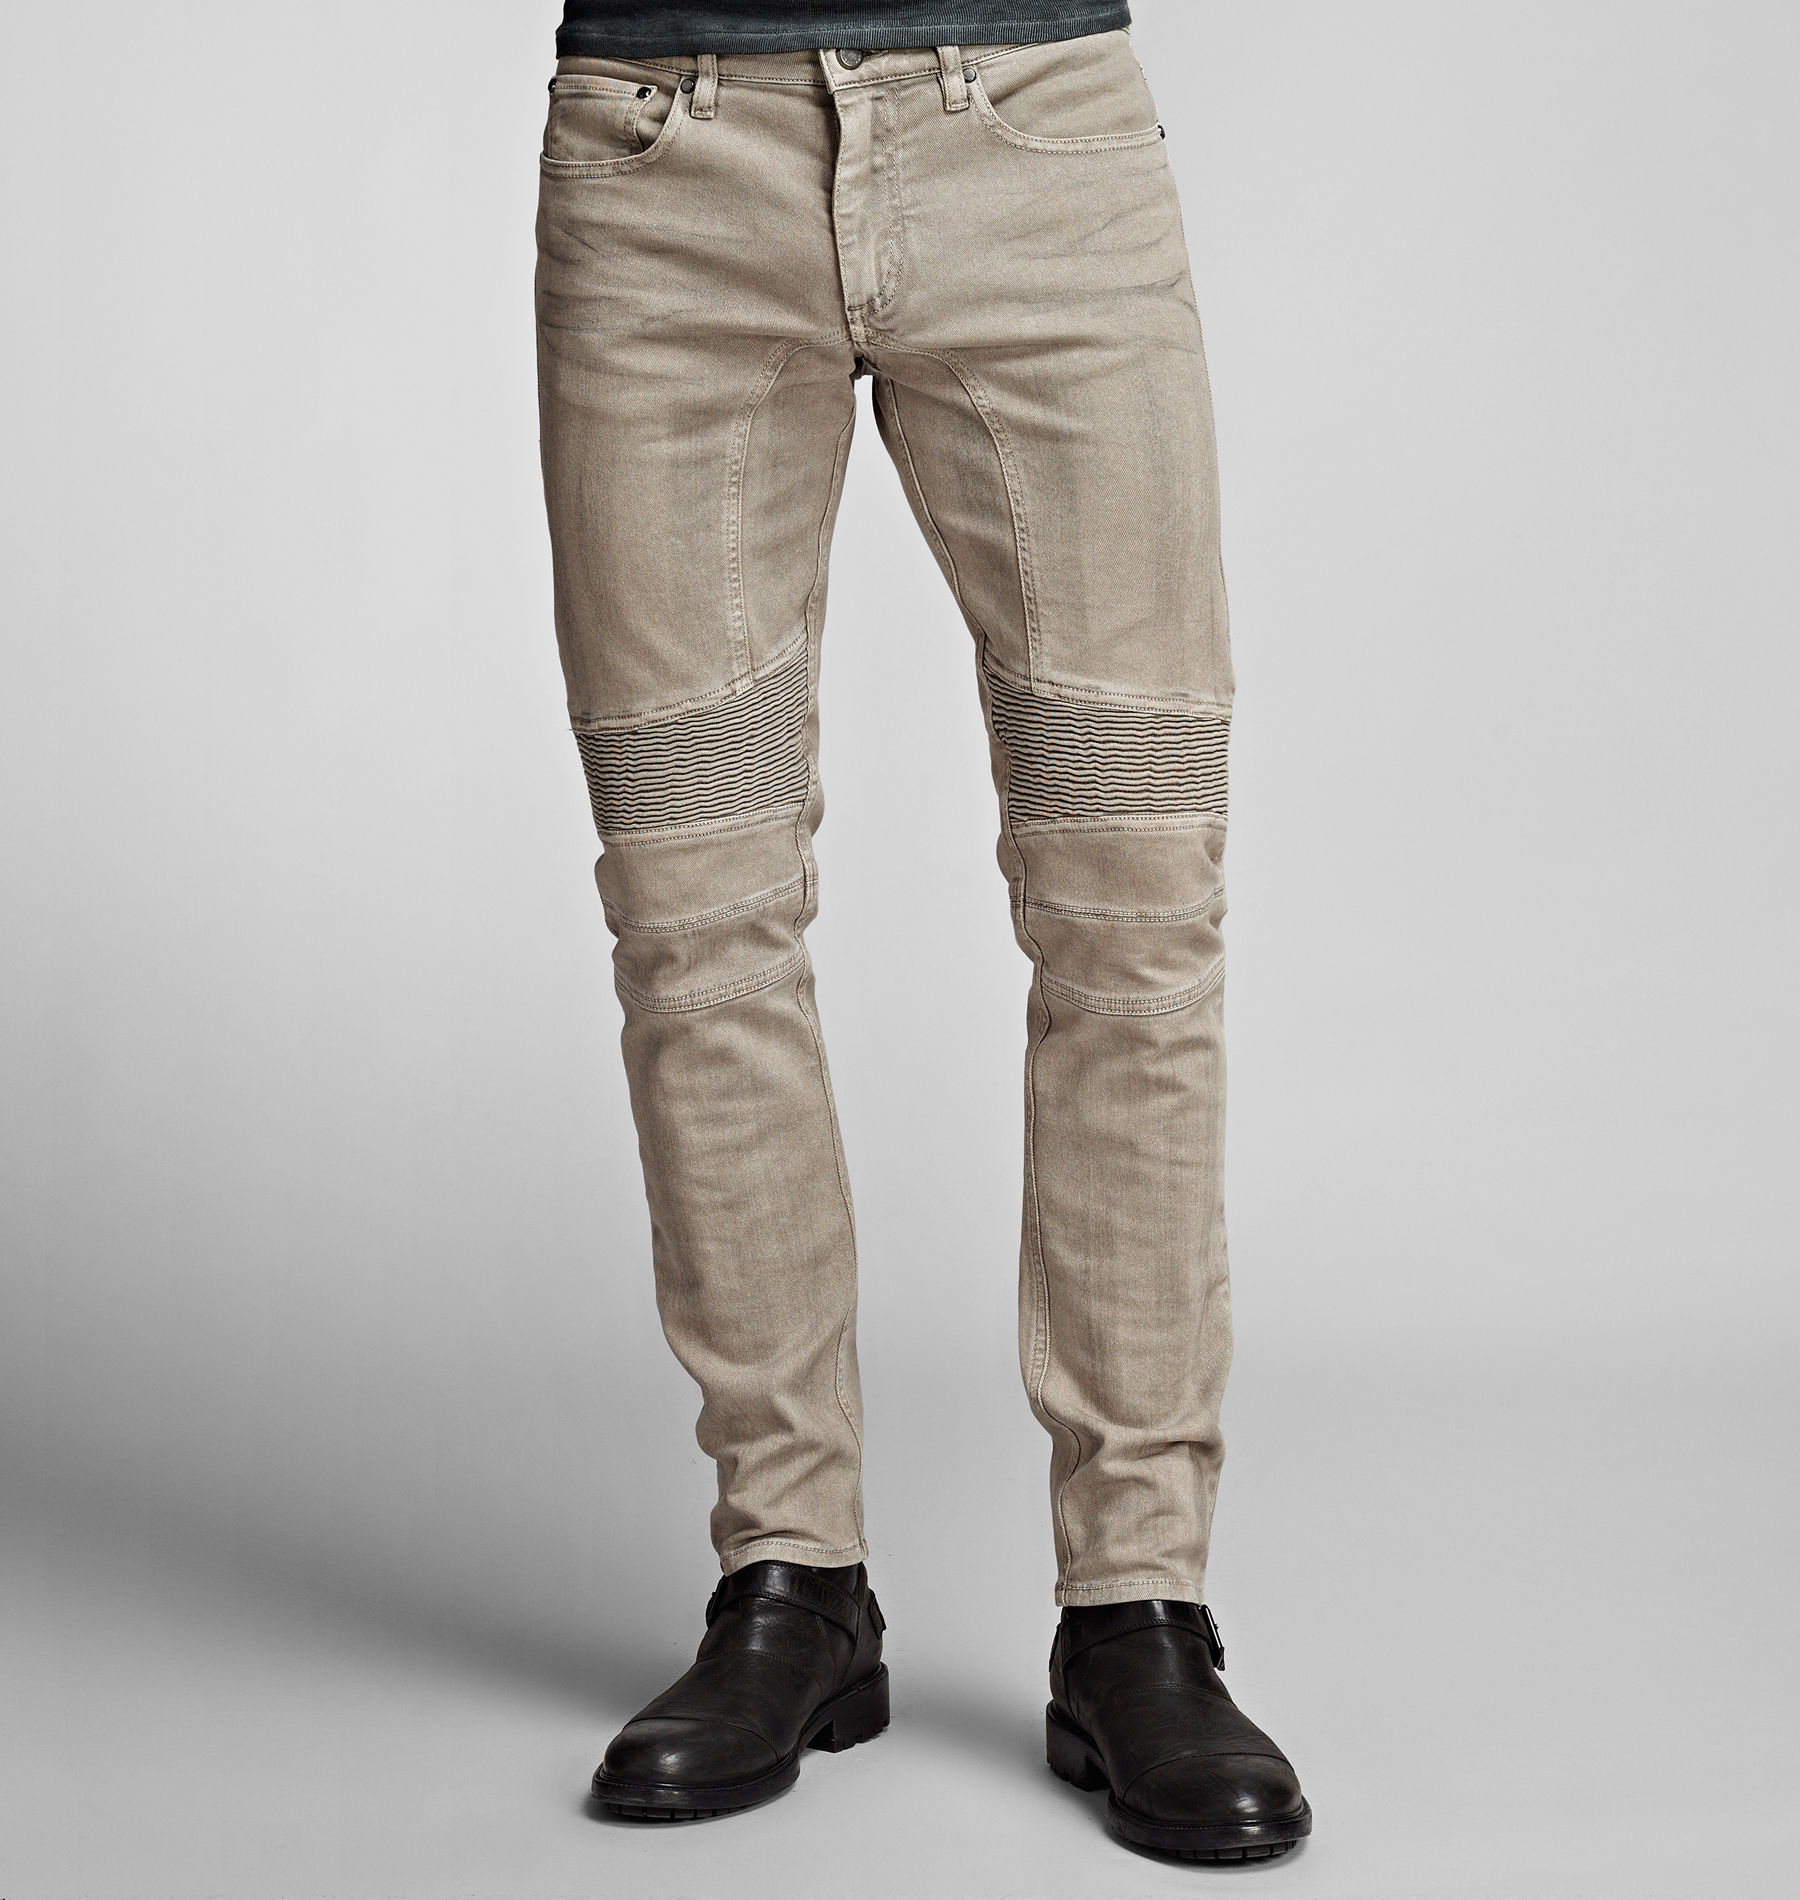 Belstaff Slim Fit Eastham Jeans in Brown for Men - Lyst